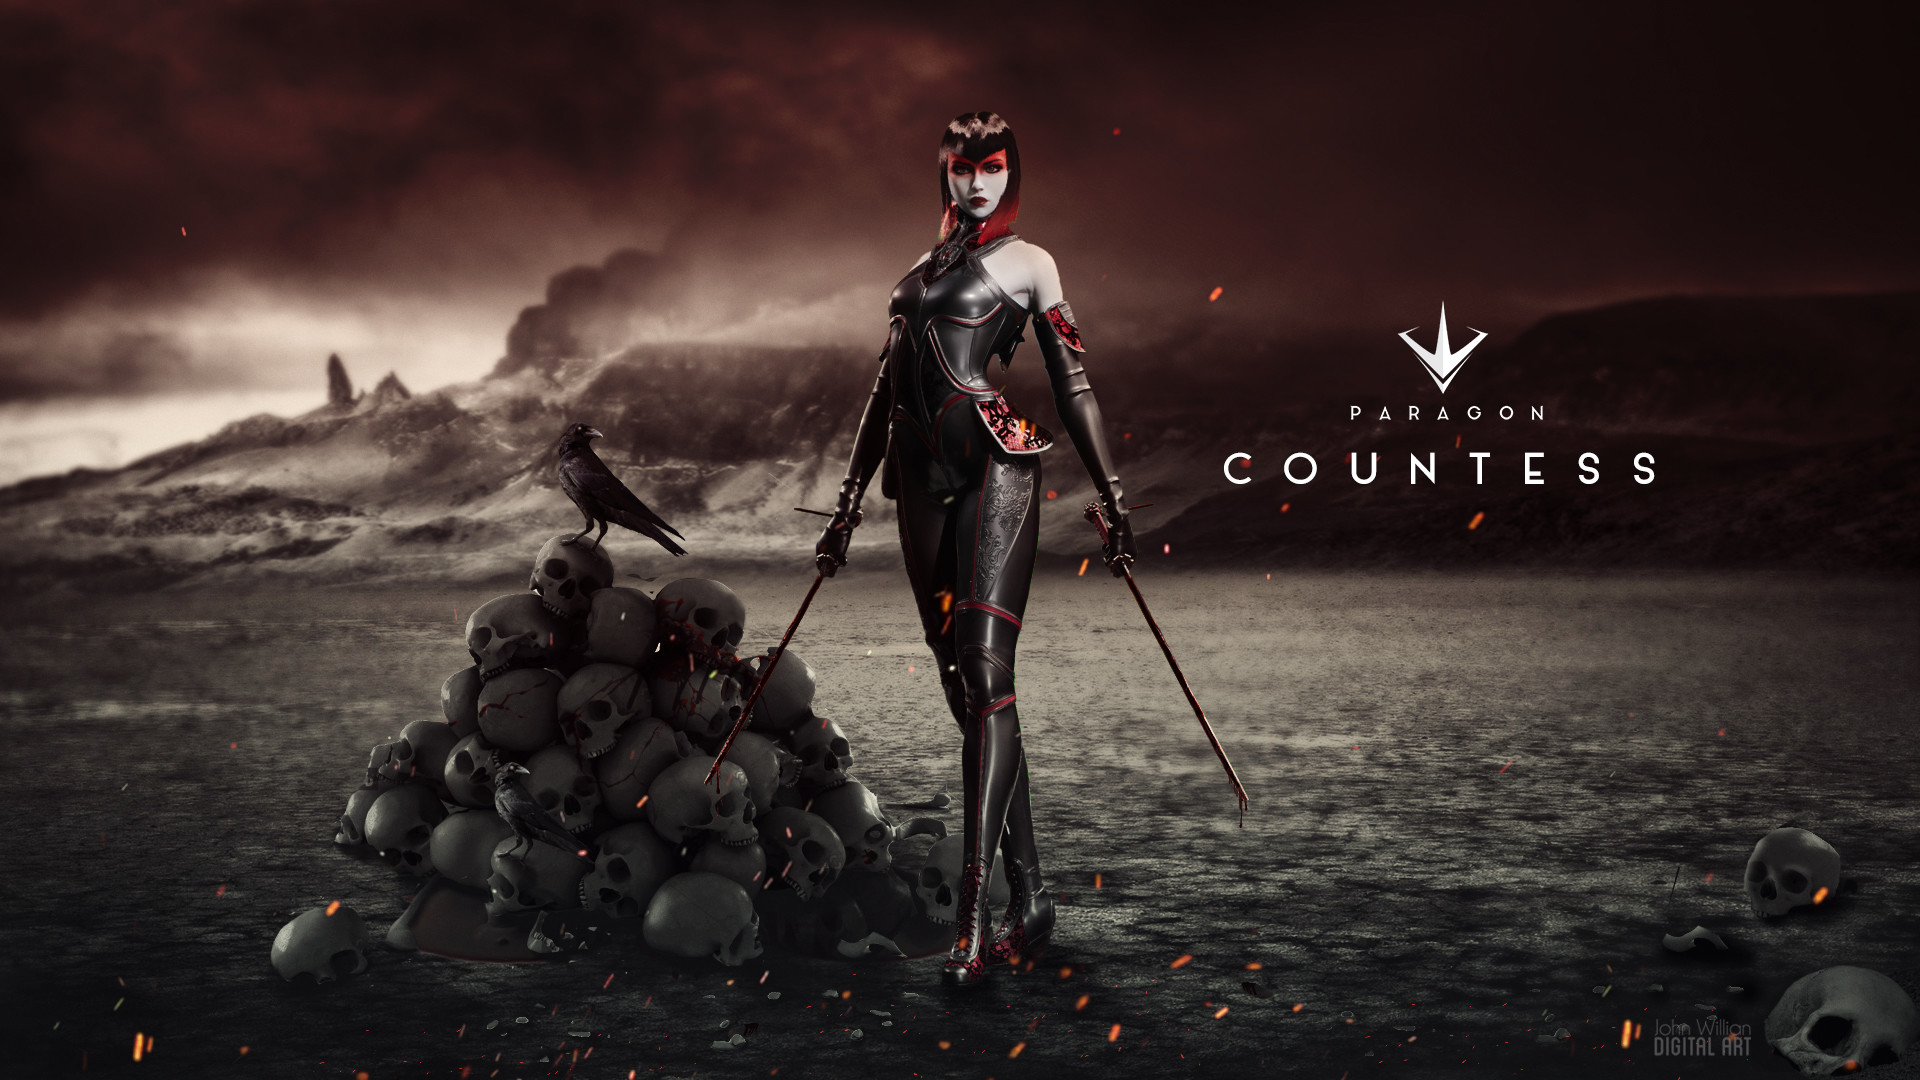 Countess paragon compilations